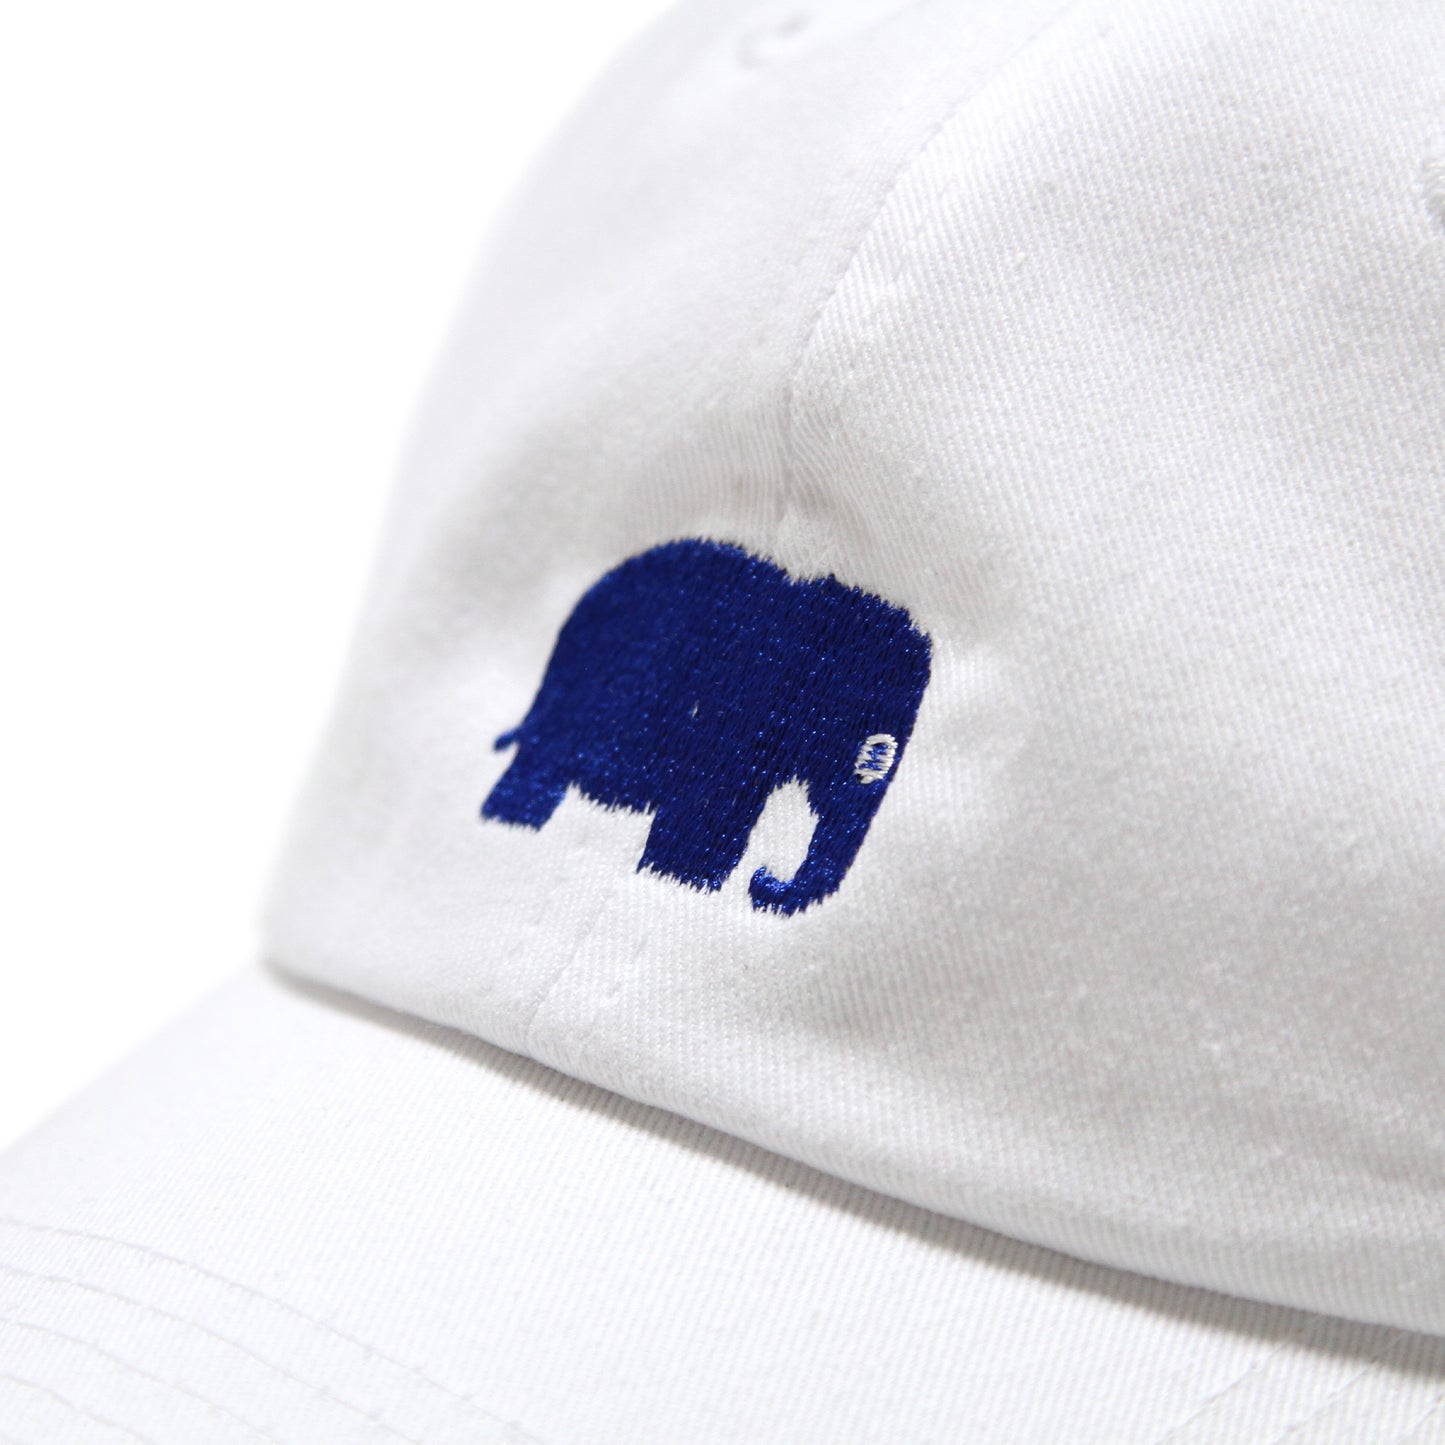 FTL - Elephant Cap/White